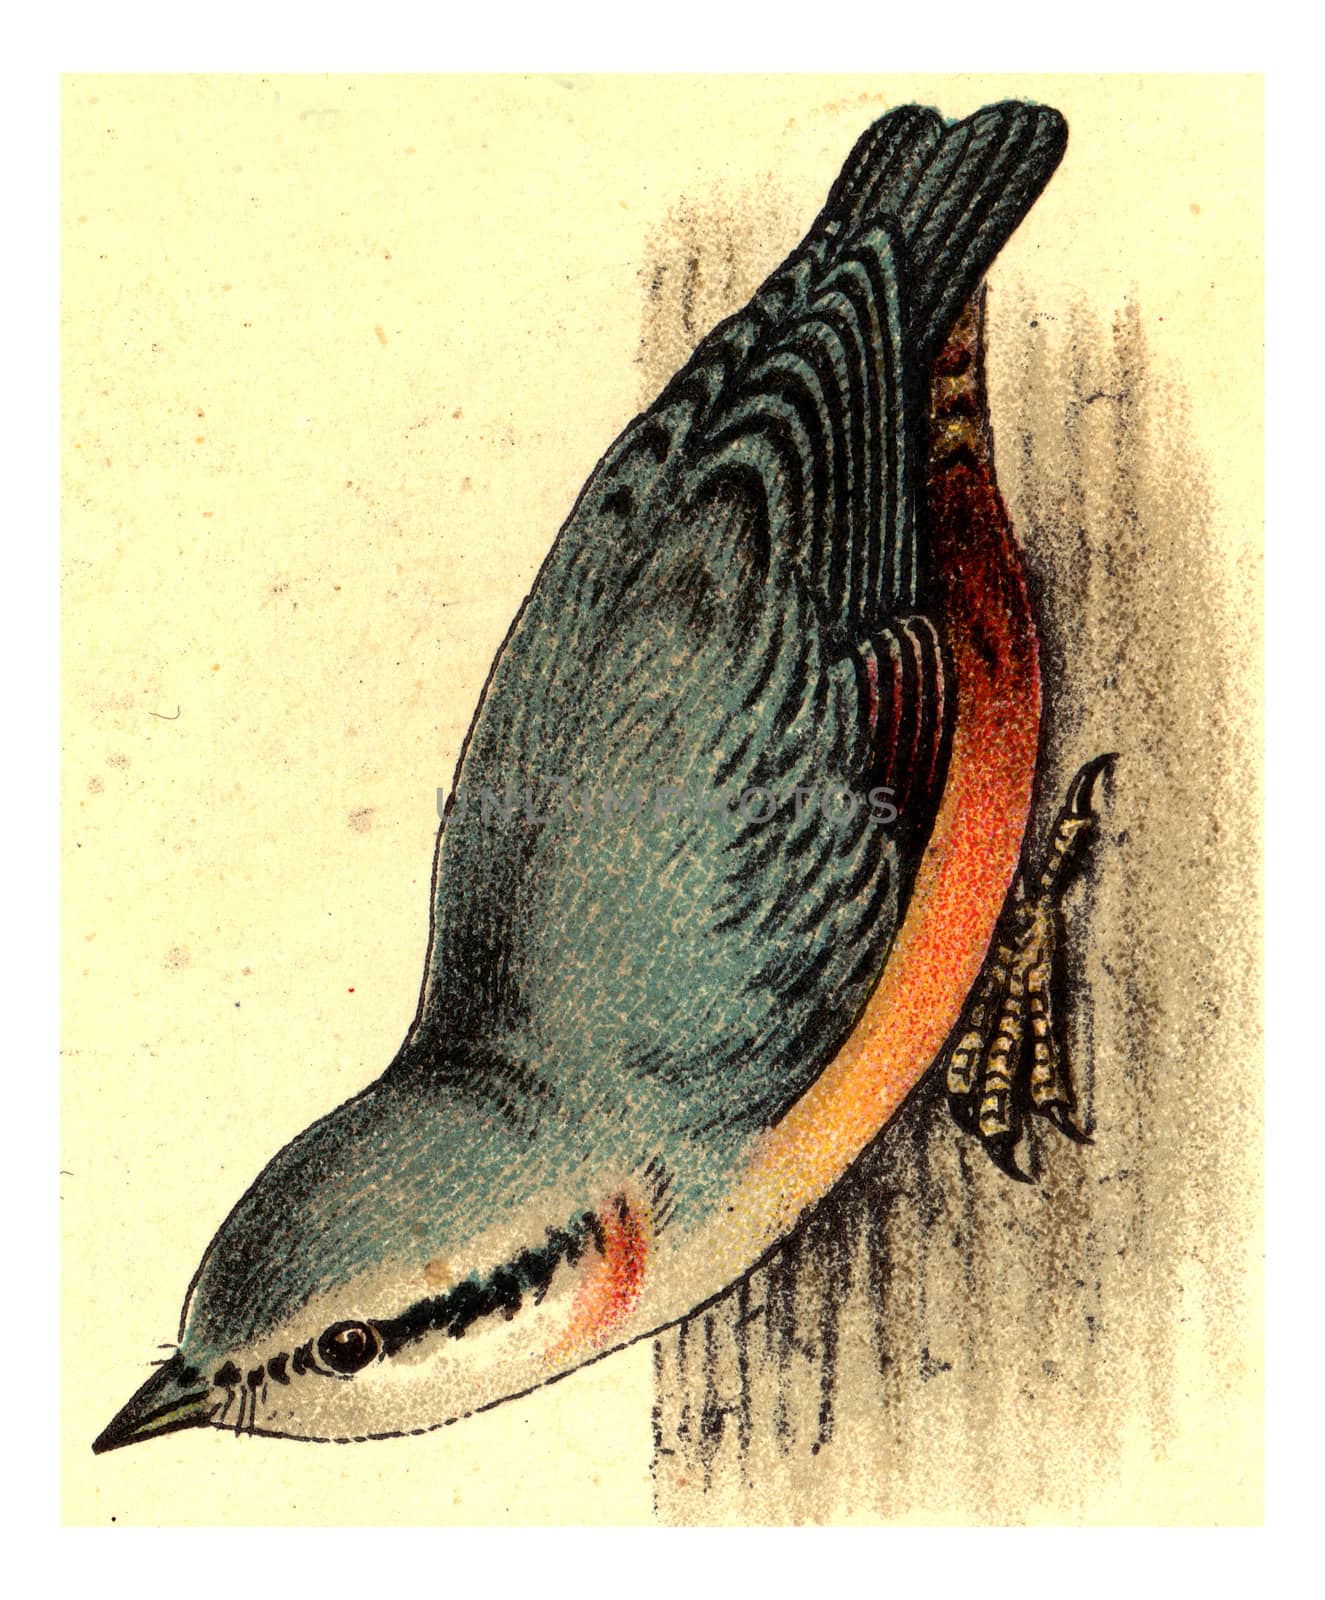 Nuthatch, vintage engraved illustration. From Deutch Birds of Europe Atlas.
